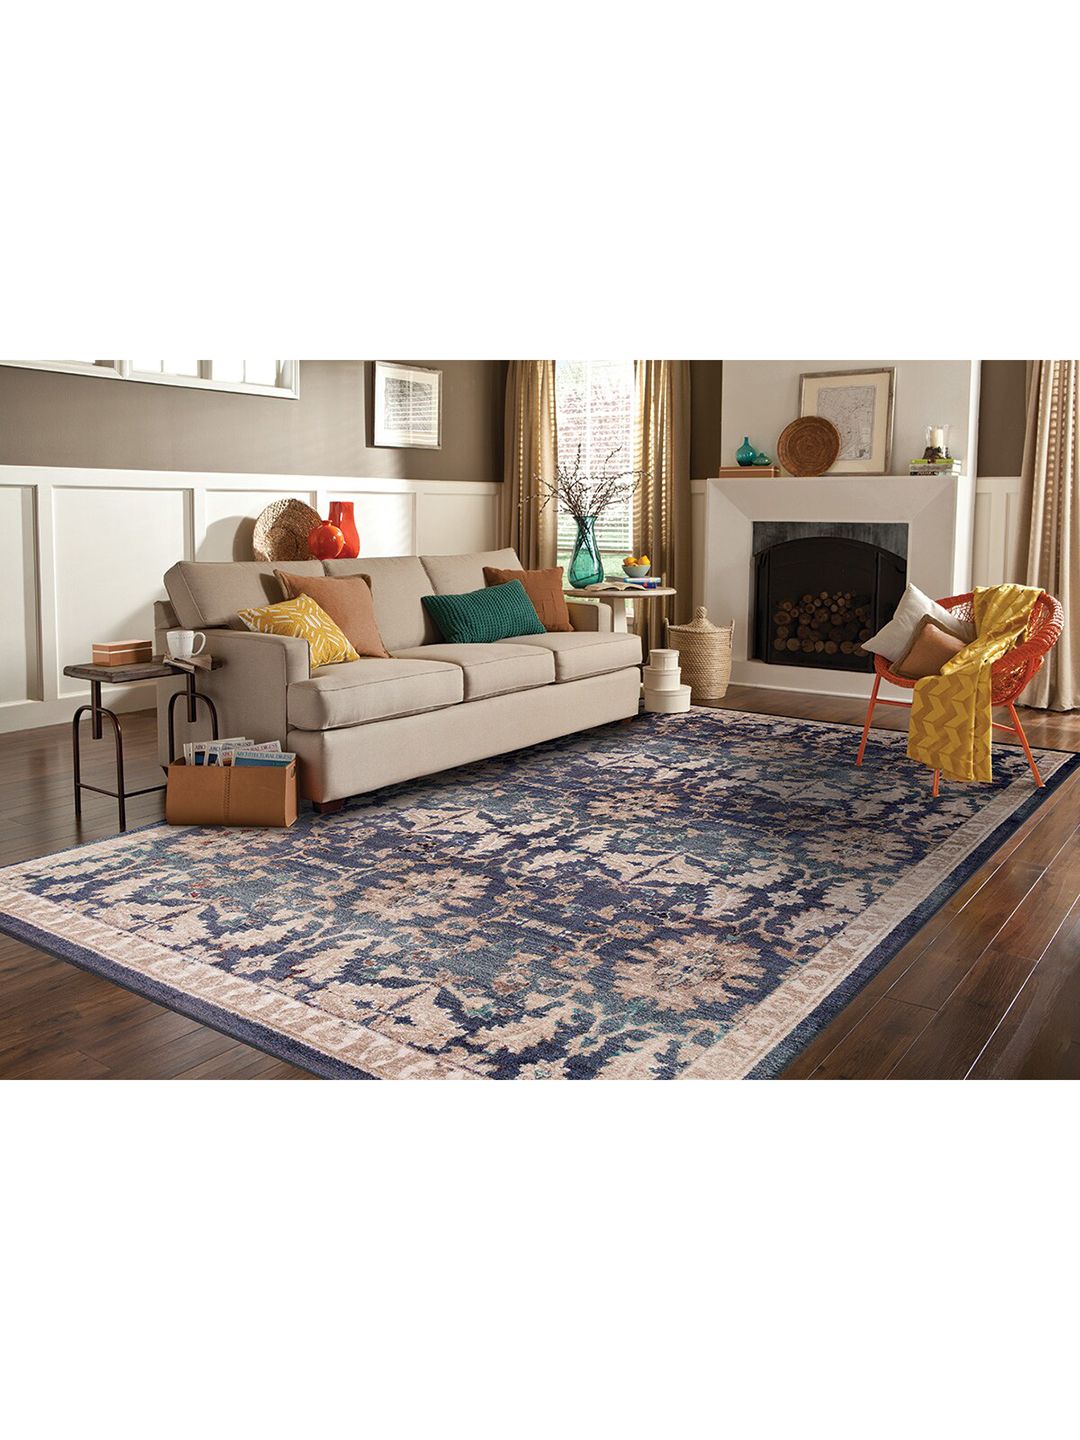 Ddecor Blue & Cream Colored Ethnic Motifs Traditional Carpet Price in India